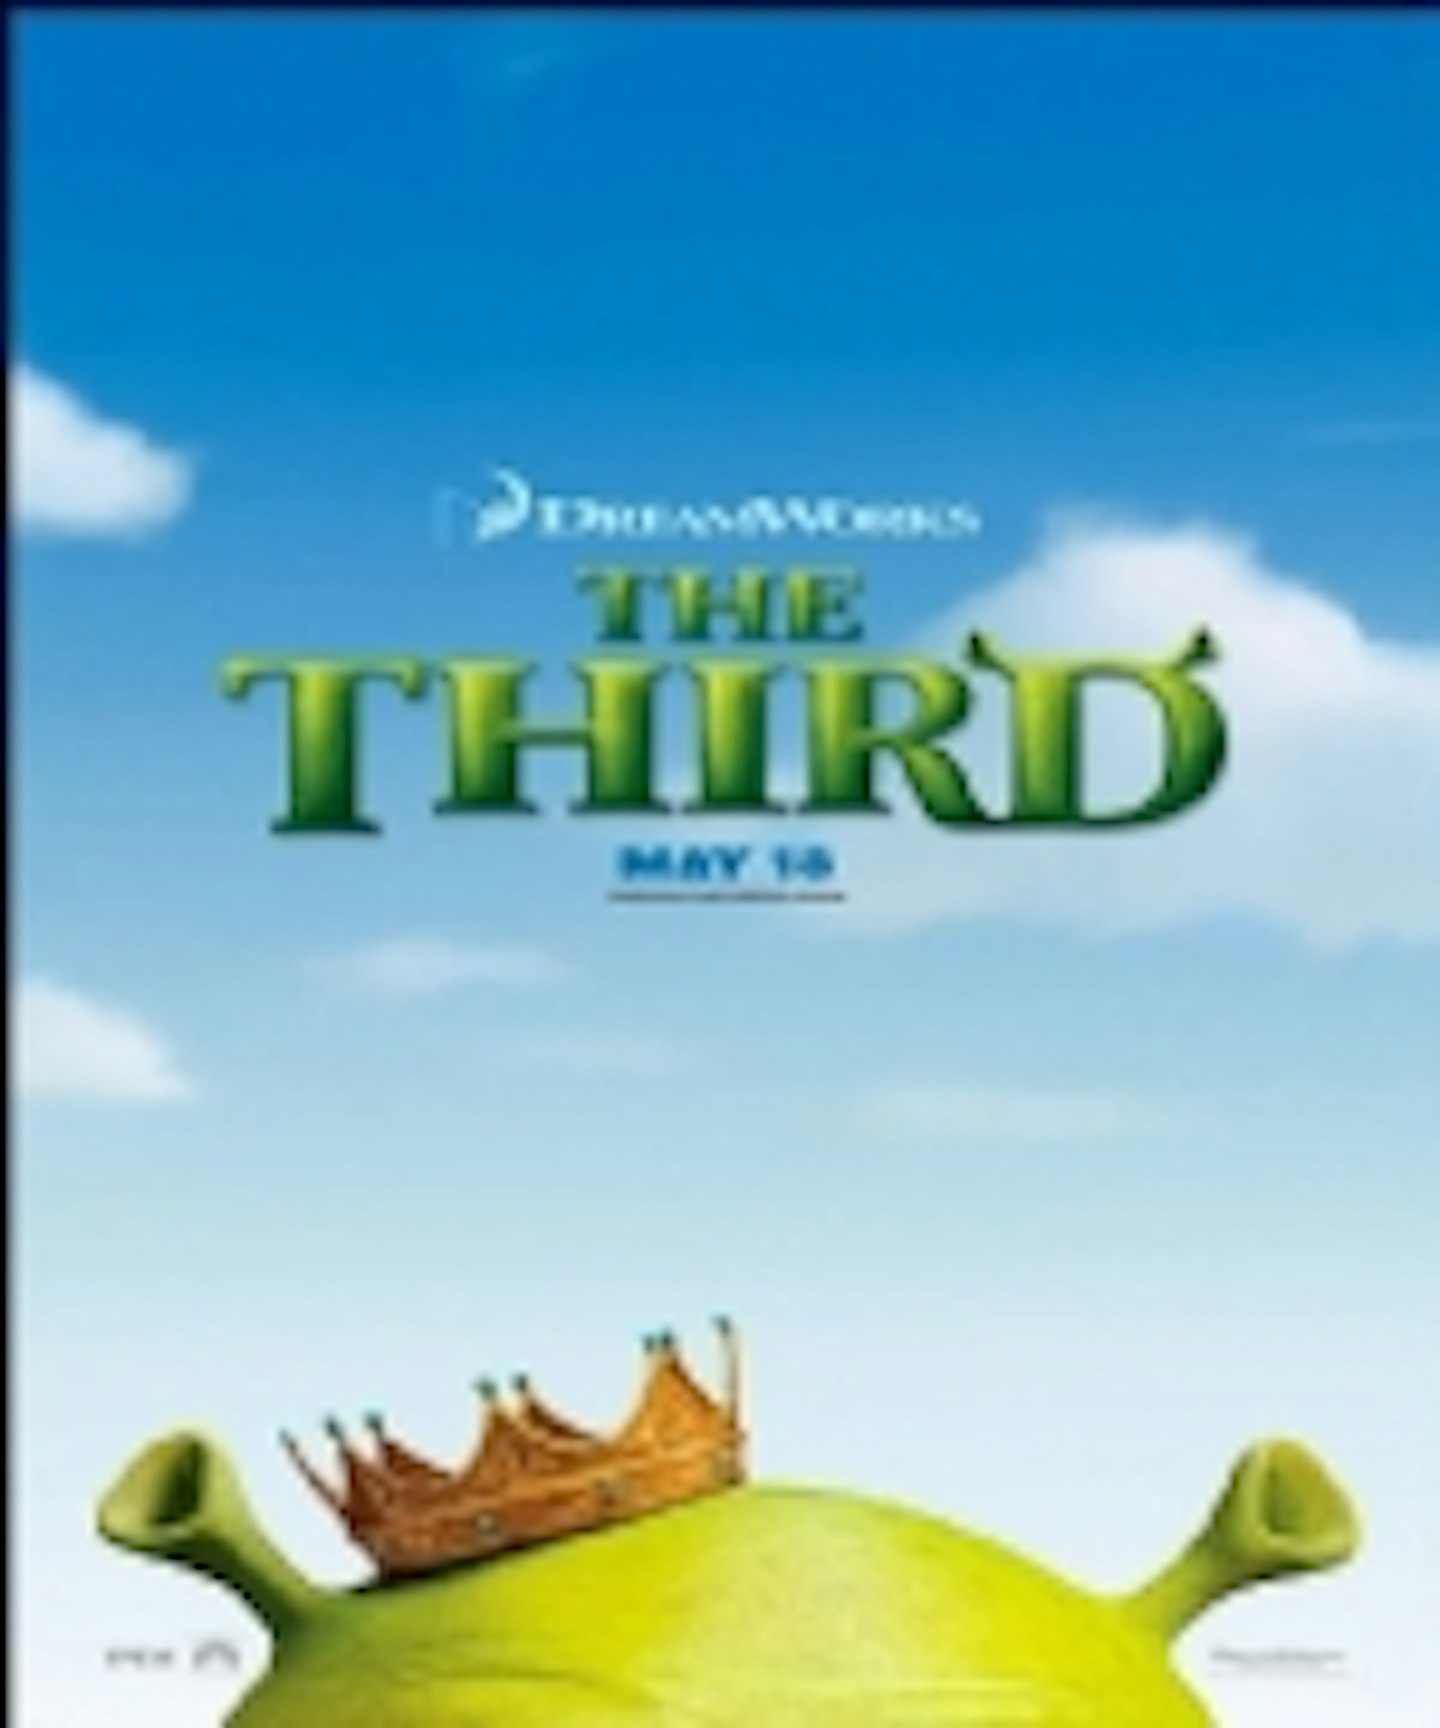 Shrek The Third Trailer Arises